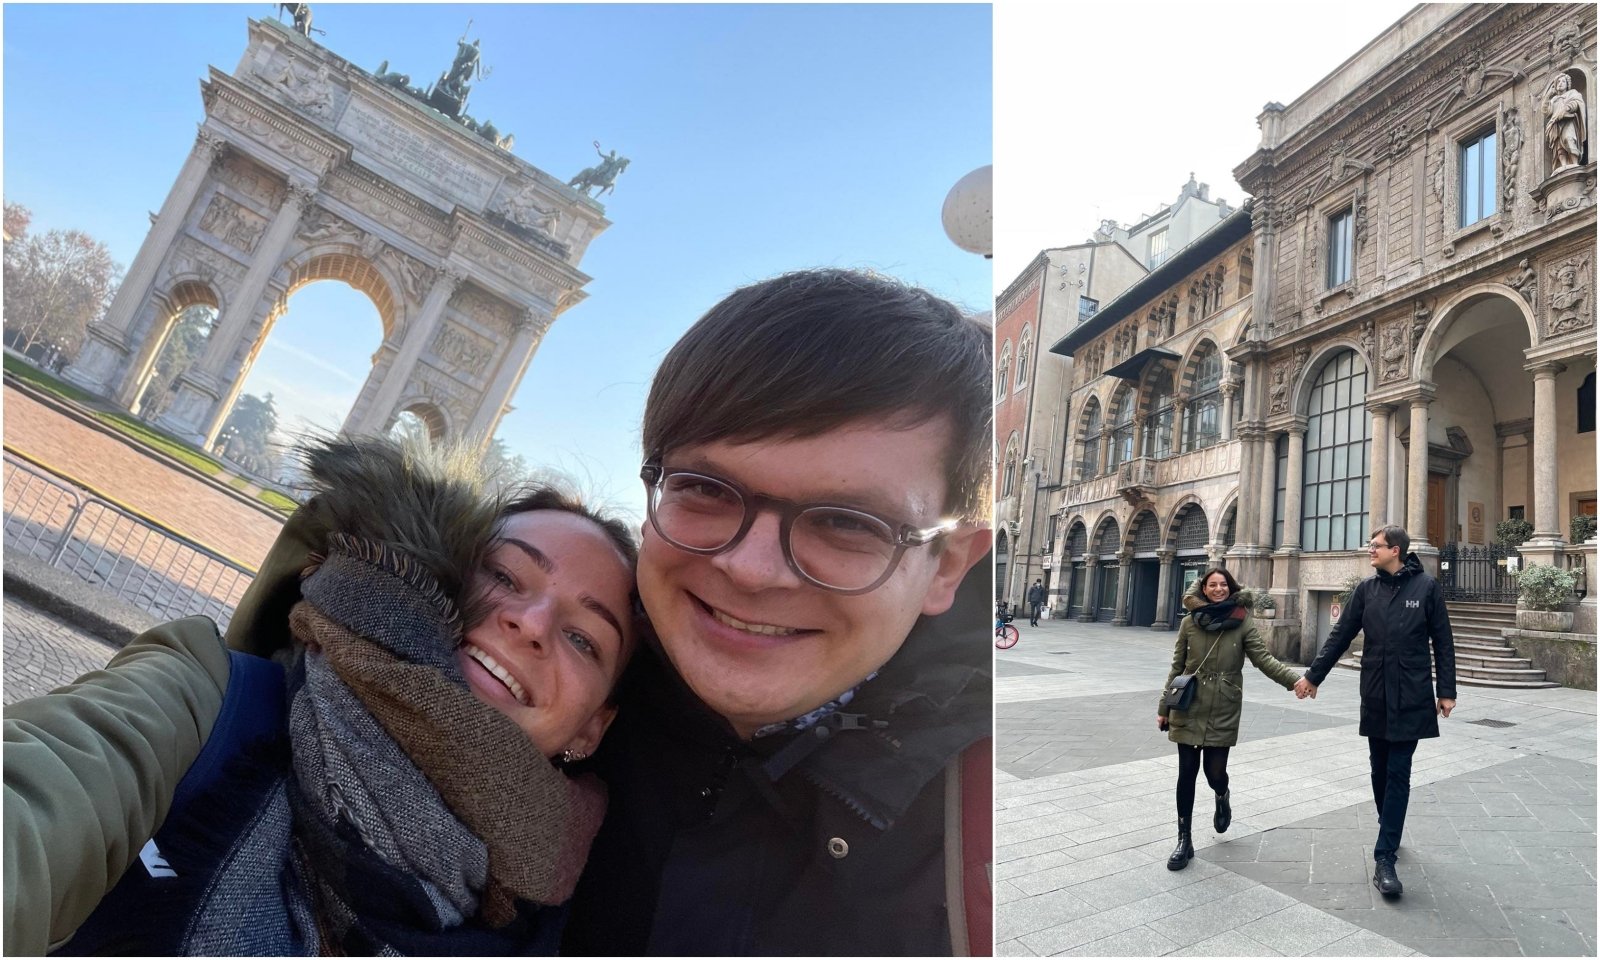 Saulius Žvirgždas e Gabrielė Tetenskaitė si sono fidanzati in Italia: la sorpresa ha funzionato